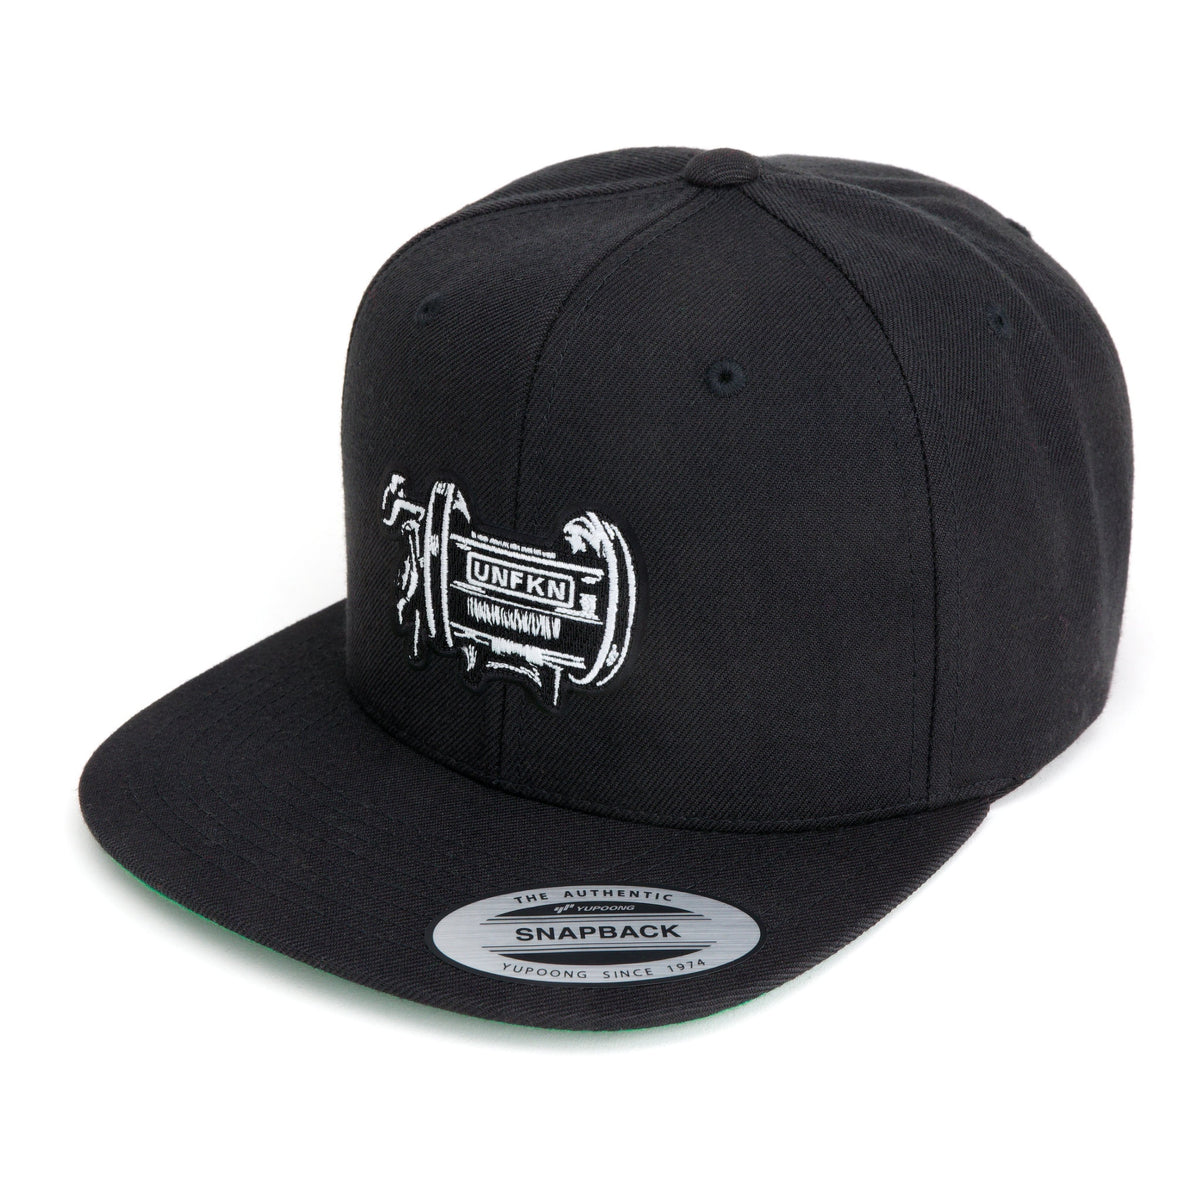 HFG - Green Fish Black Snapback Flatbill Hat